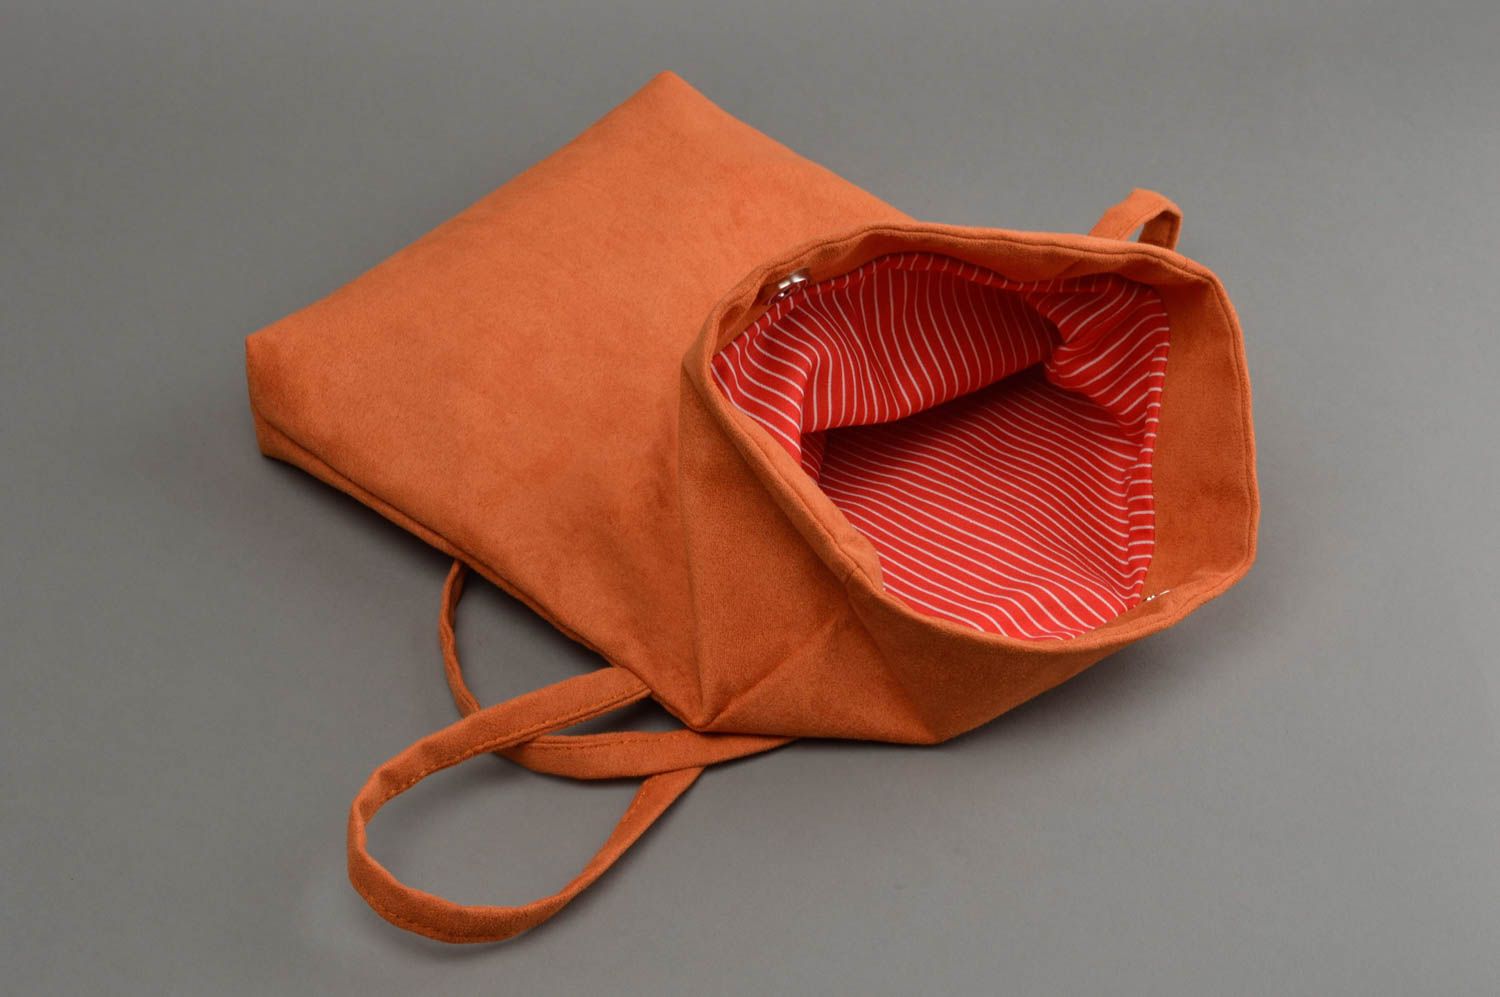 Handmade orange cloth purse designer handbag gift ideas for her women accessory photo 3